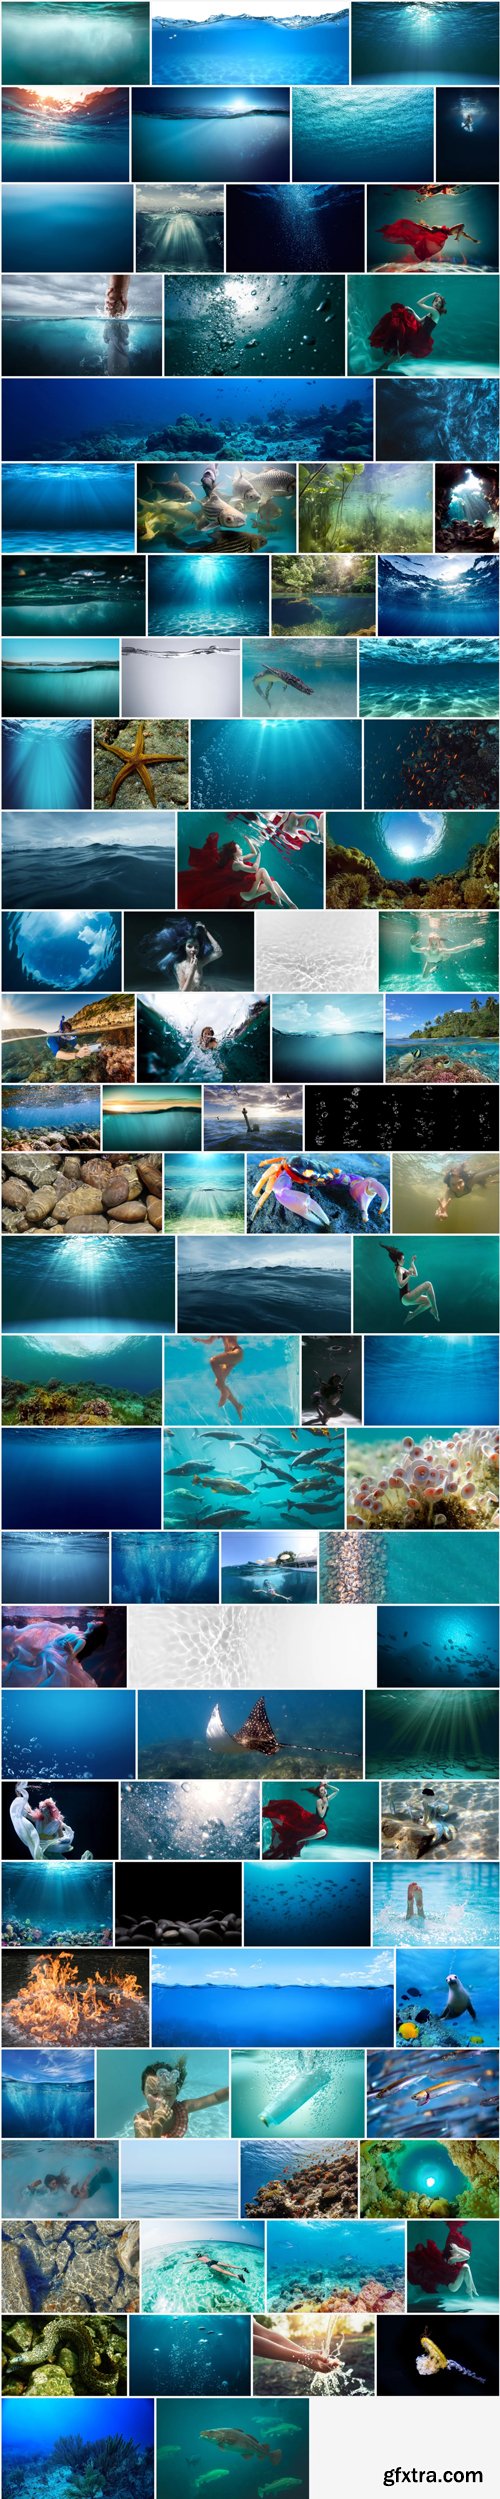 Stock Photo - Under Water